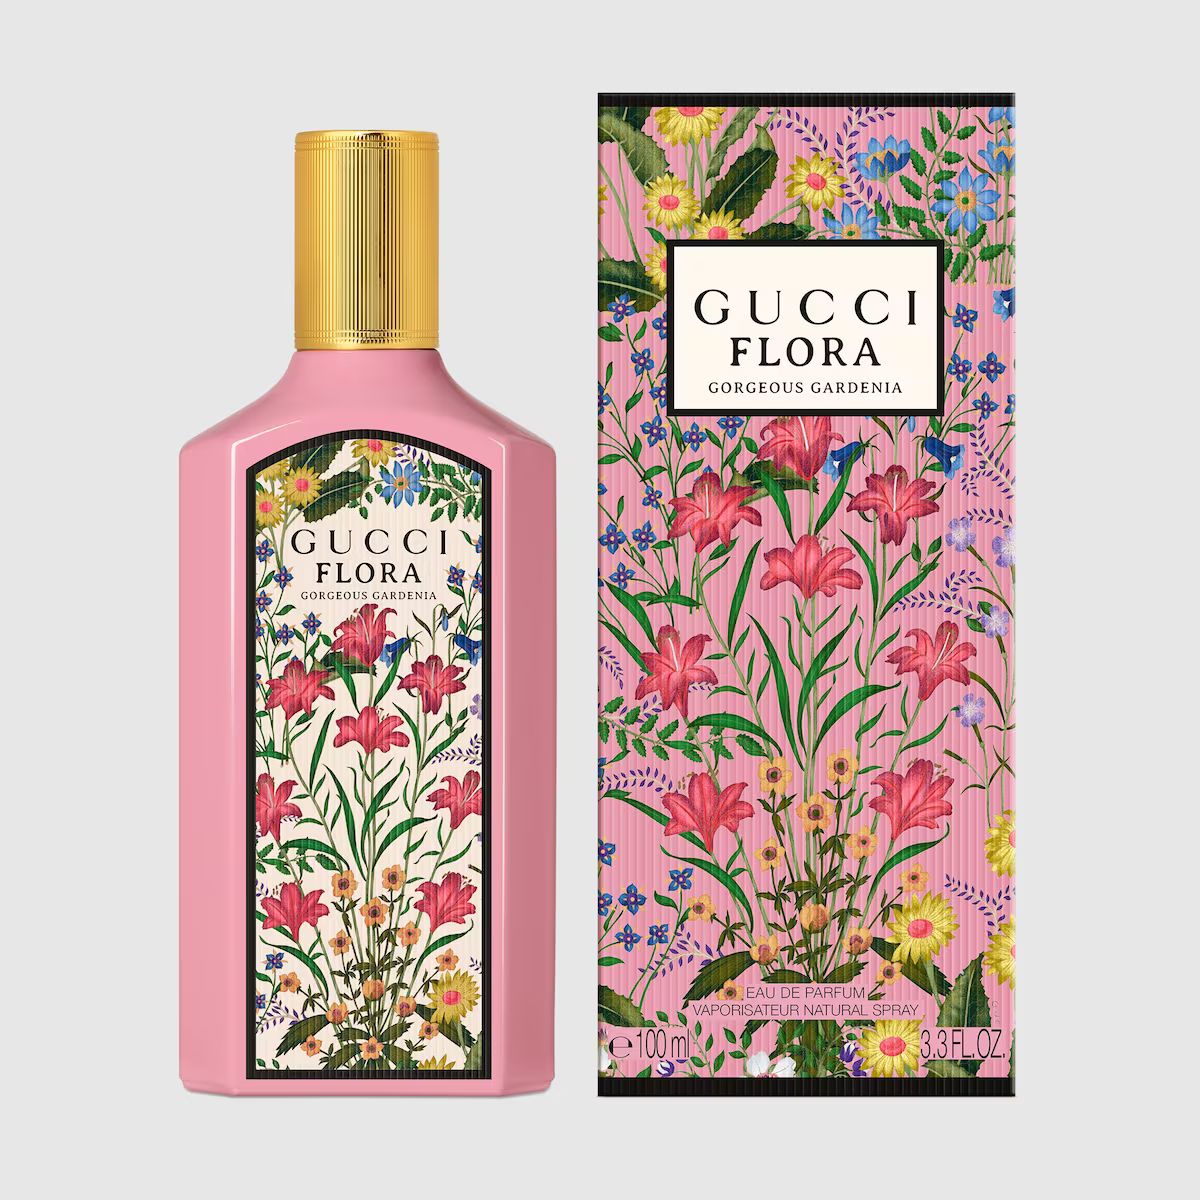 Gucci Flora Gorgeous Gardenia, 100ml, eau de parfum | Gucci (EU)